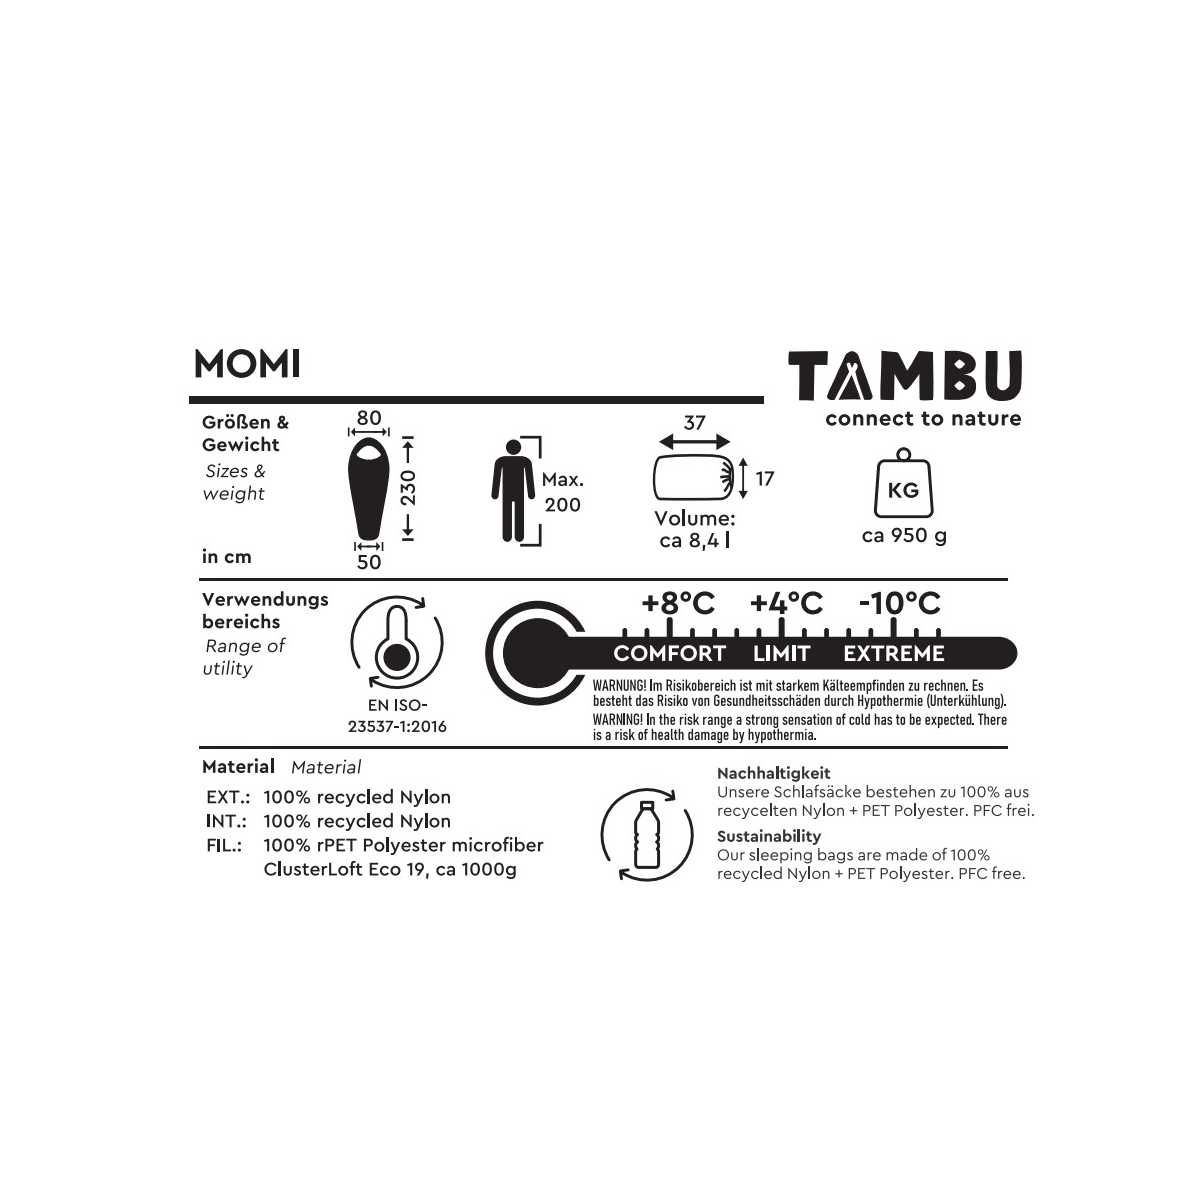 TAMBU MOMI Mumienschlafsack 950 g Graublau - 20211005